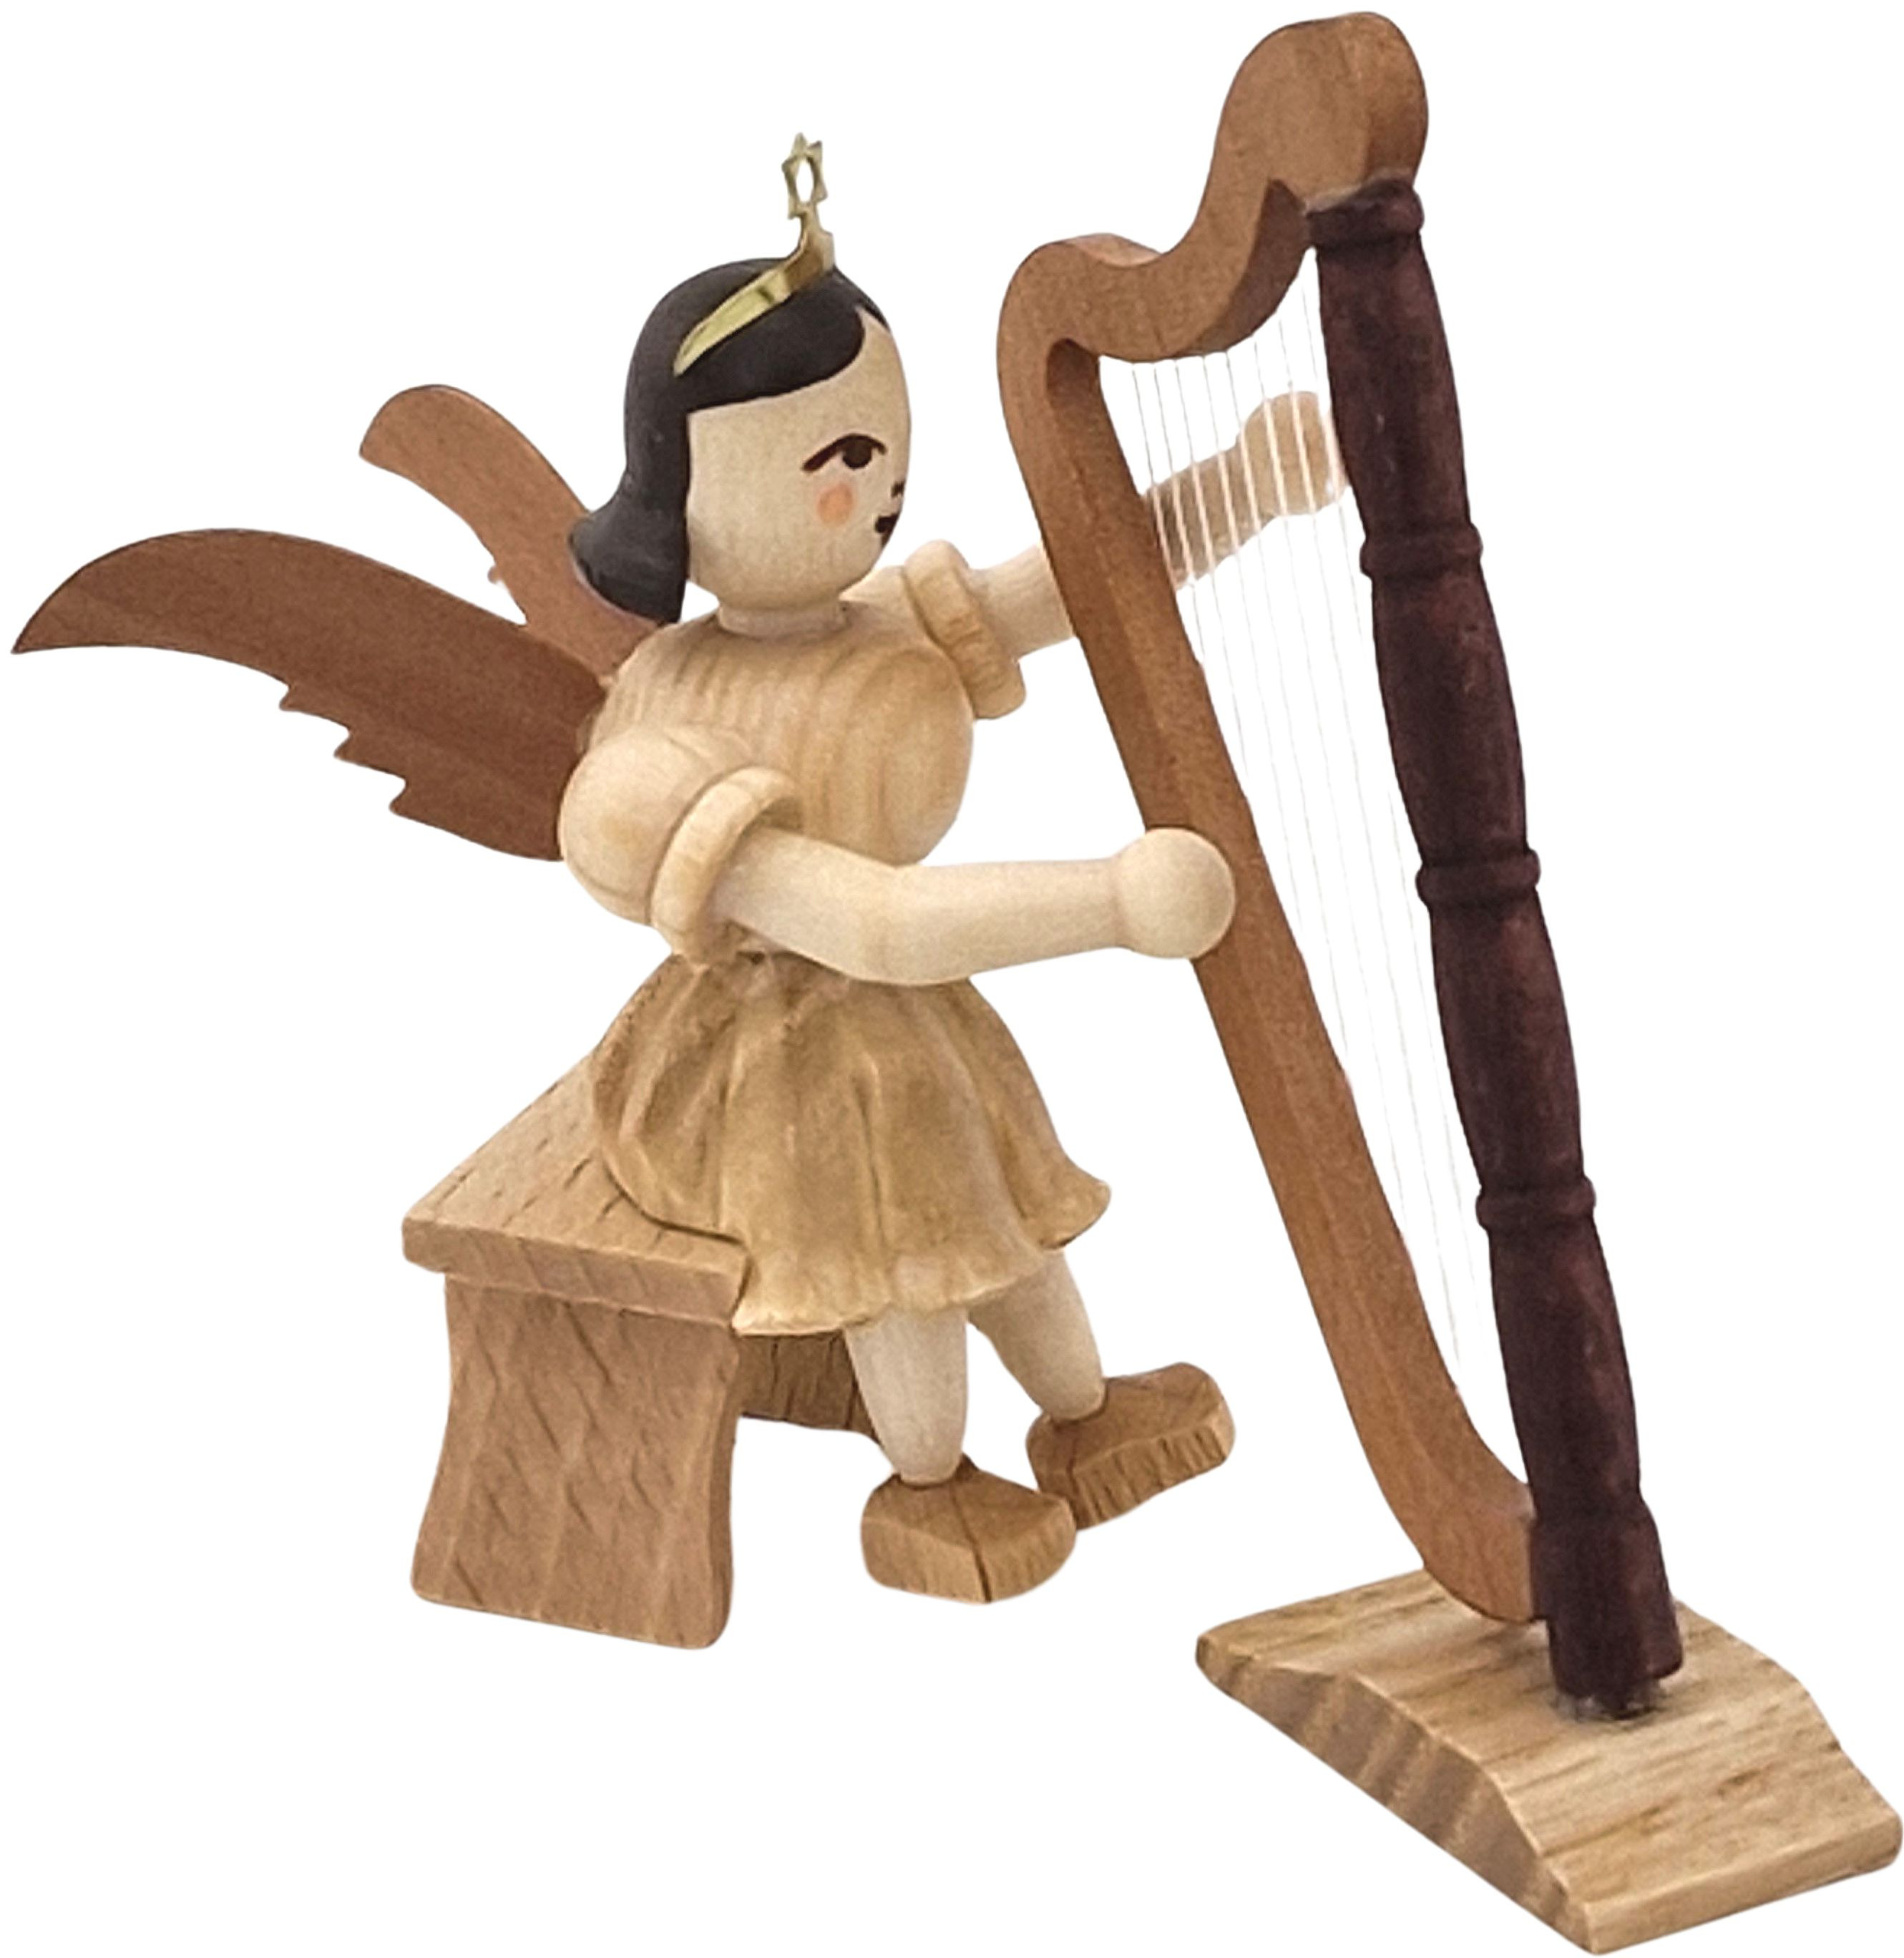 Blank Kurzrockengel mit Harfe, sitzend